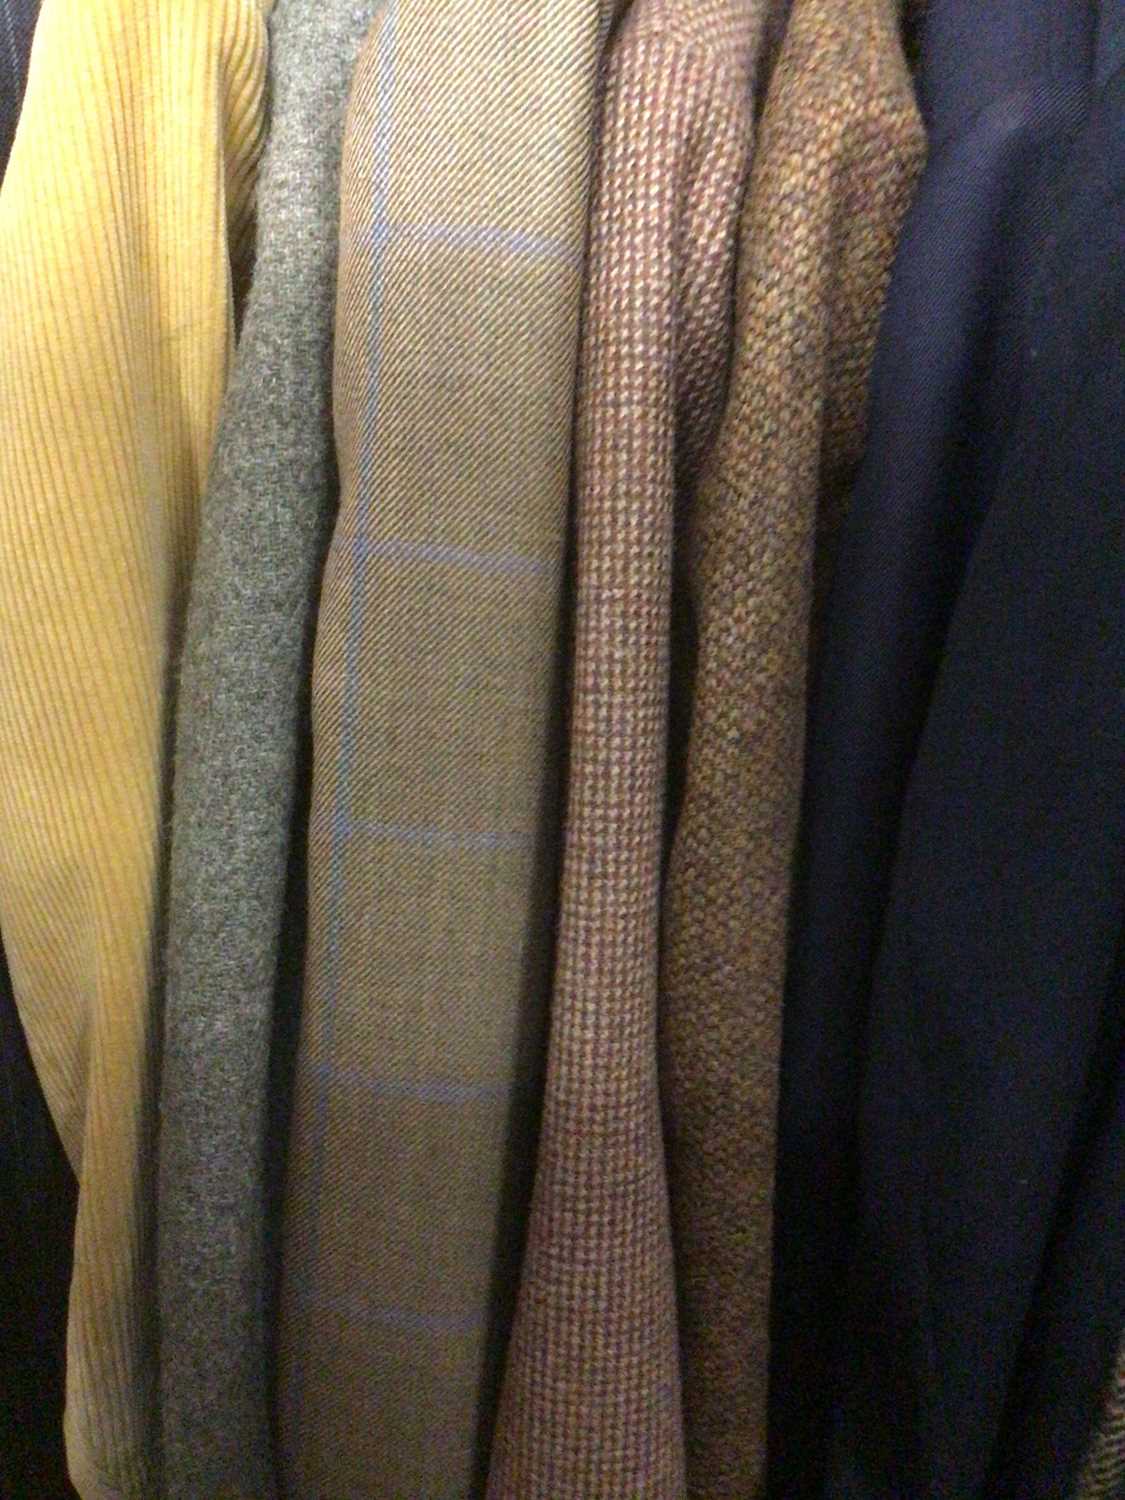 Gentlemen's jackets including three tweed, corduroy by Bertie Wooster and two Navy Blazers by Harrod